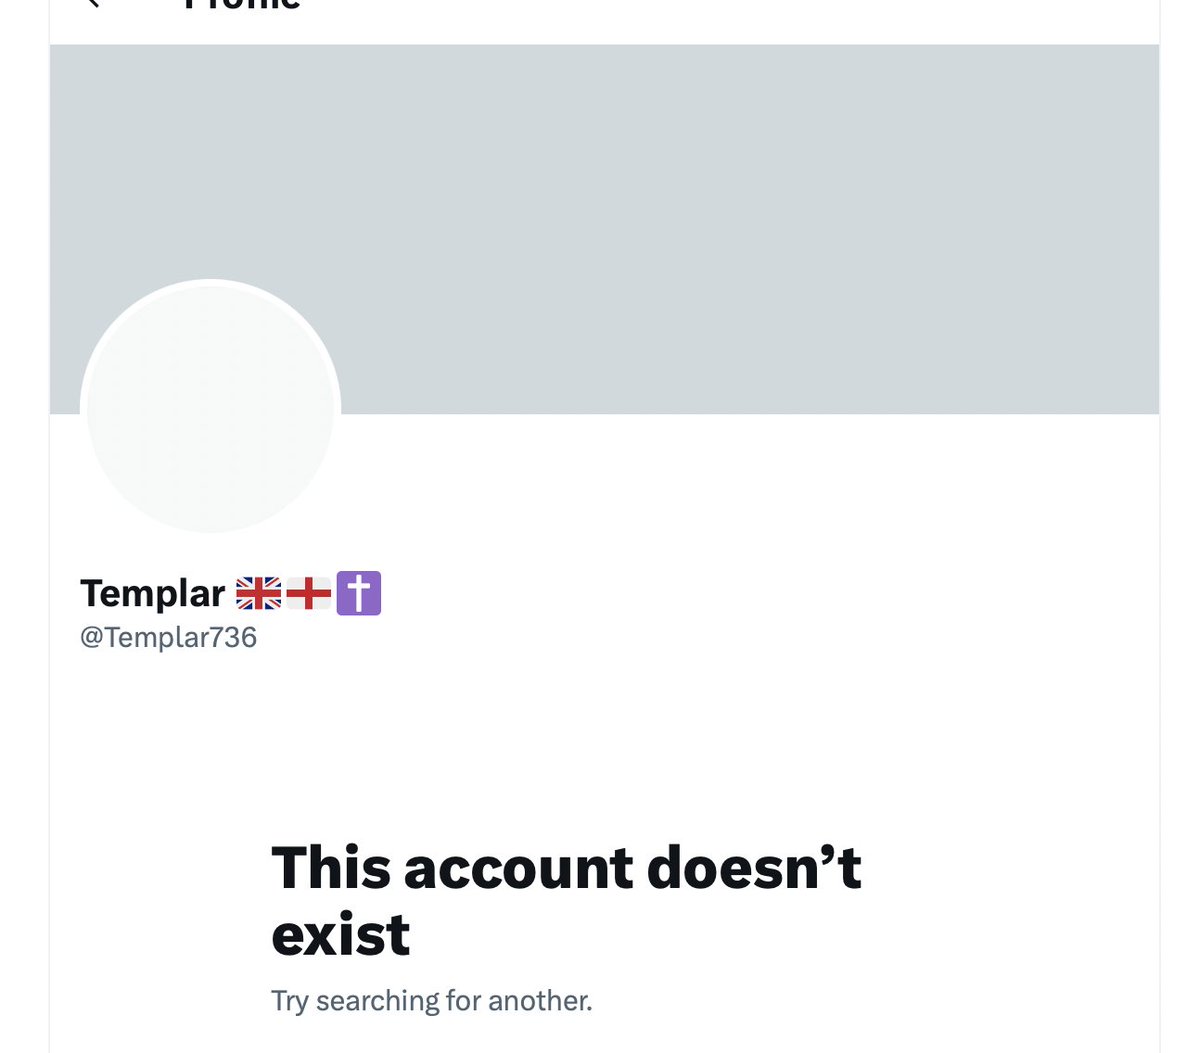 @EsheruKwaku He seems to have shut down/deleted his account. 
#WhiteNationalism is racism
#EndRacism